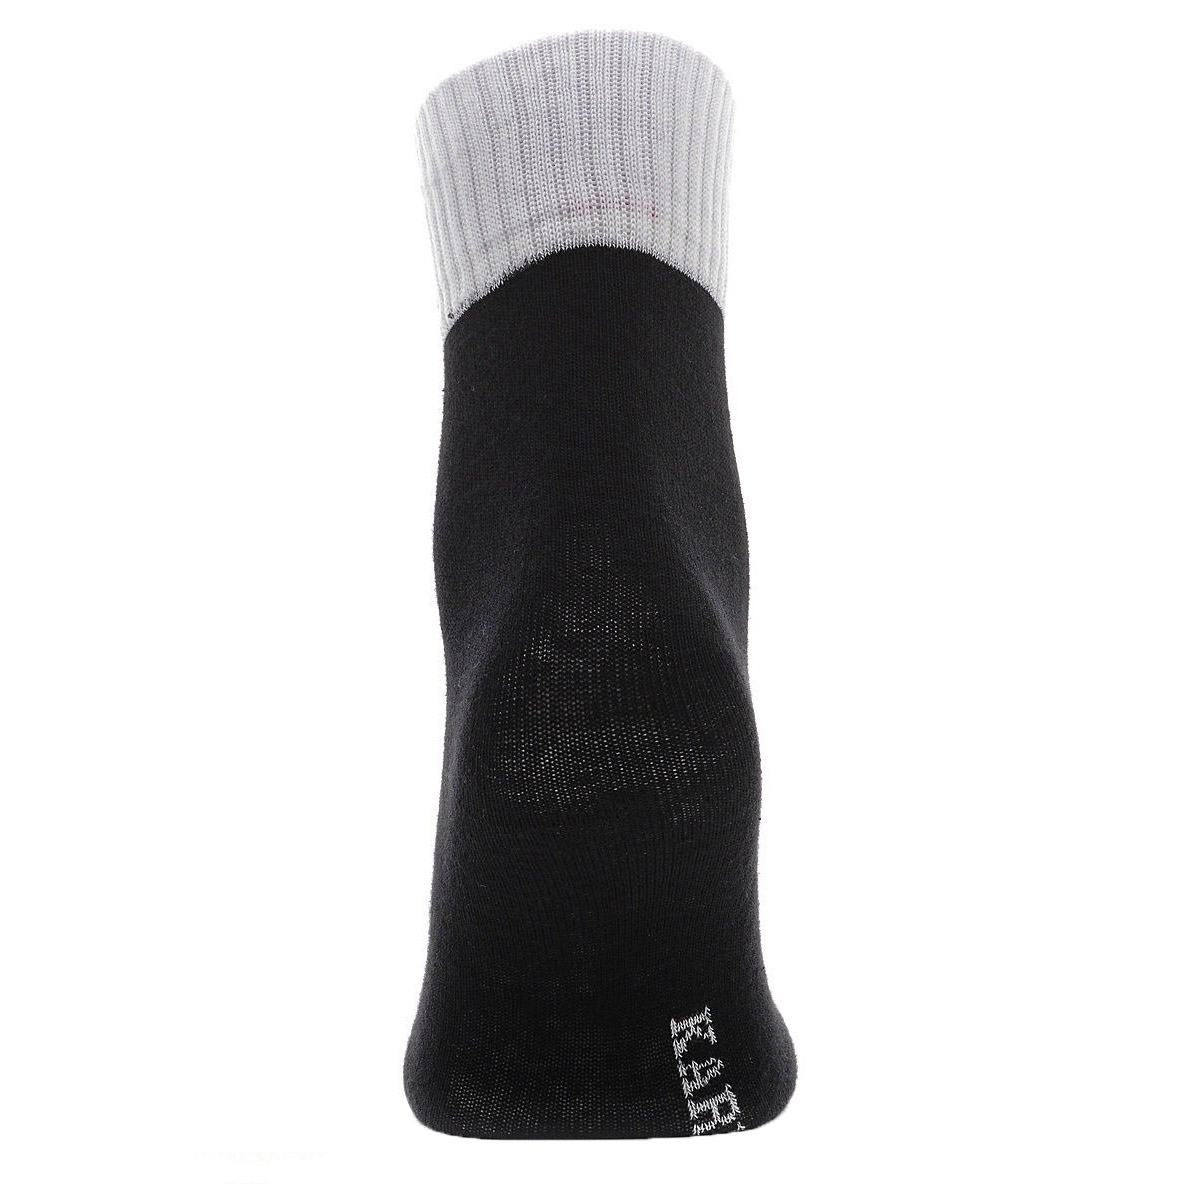 Носки Karmen Calza Look nero S 35-37, цвет черный, размер 35-37 - фото 2